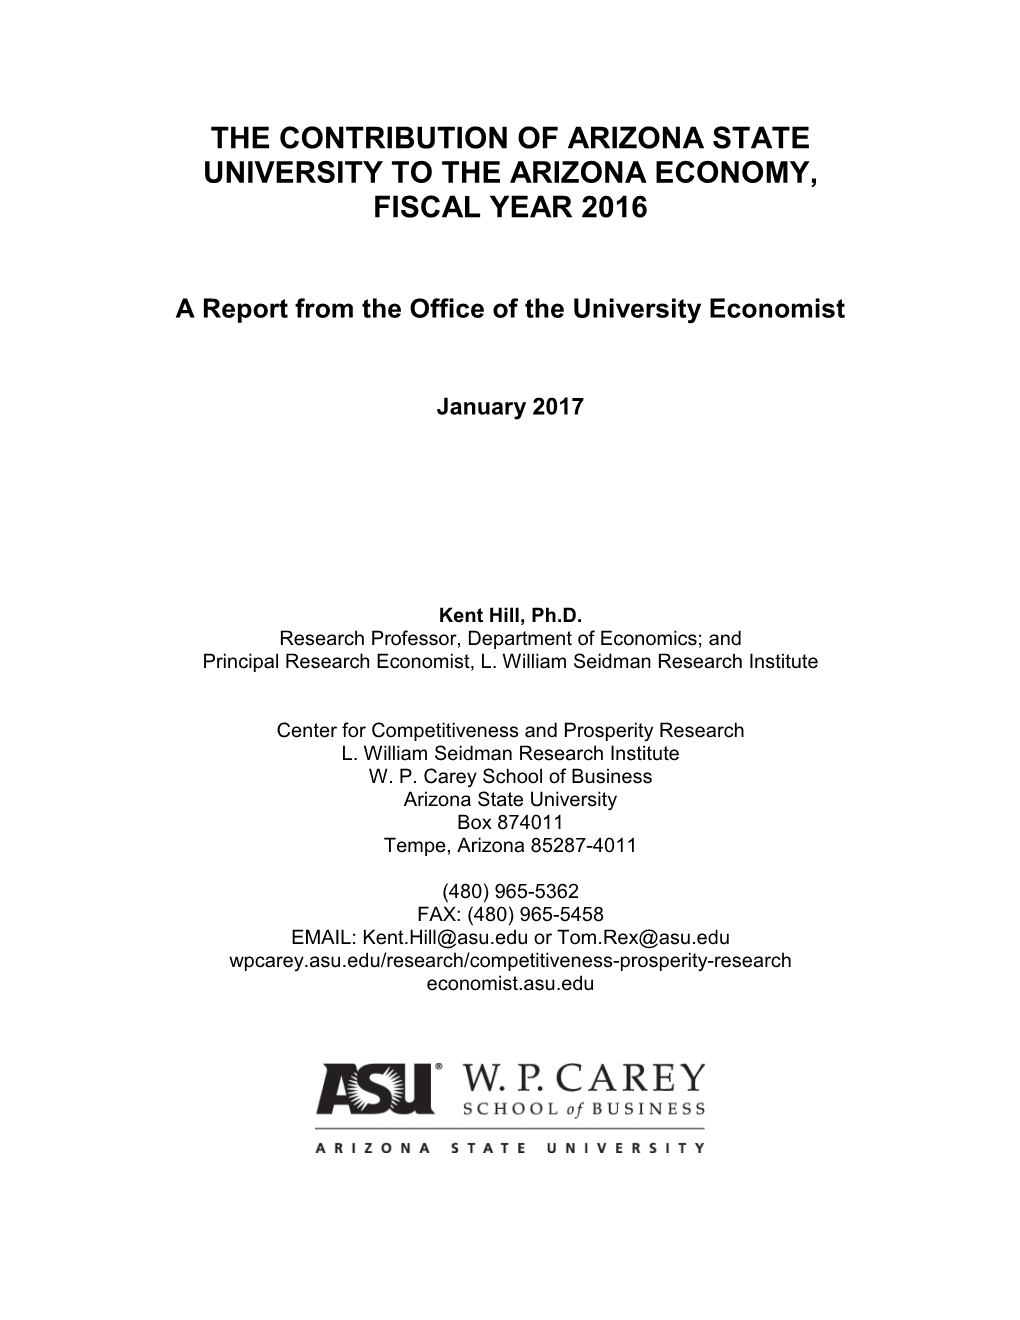 The Contribution of Arizona State University to the Arizona Economy, Fiscal Year 2016